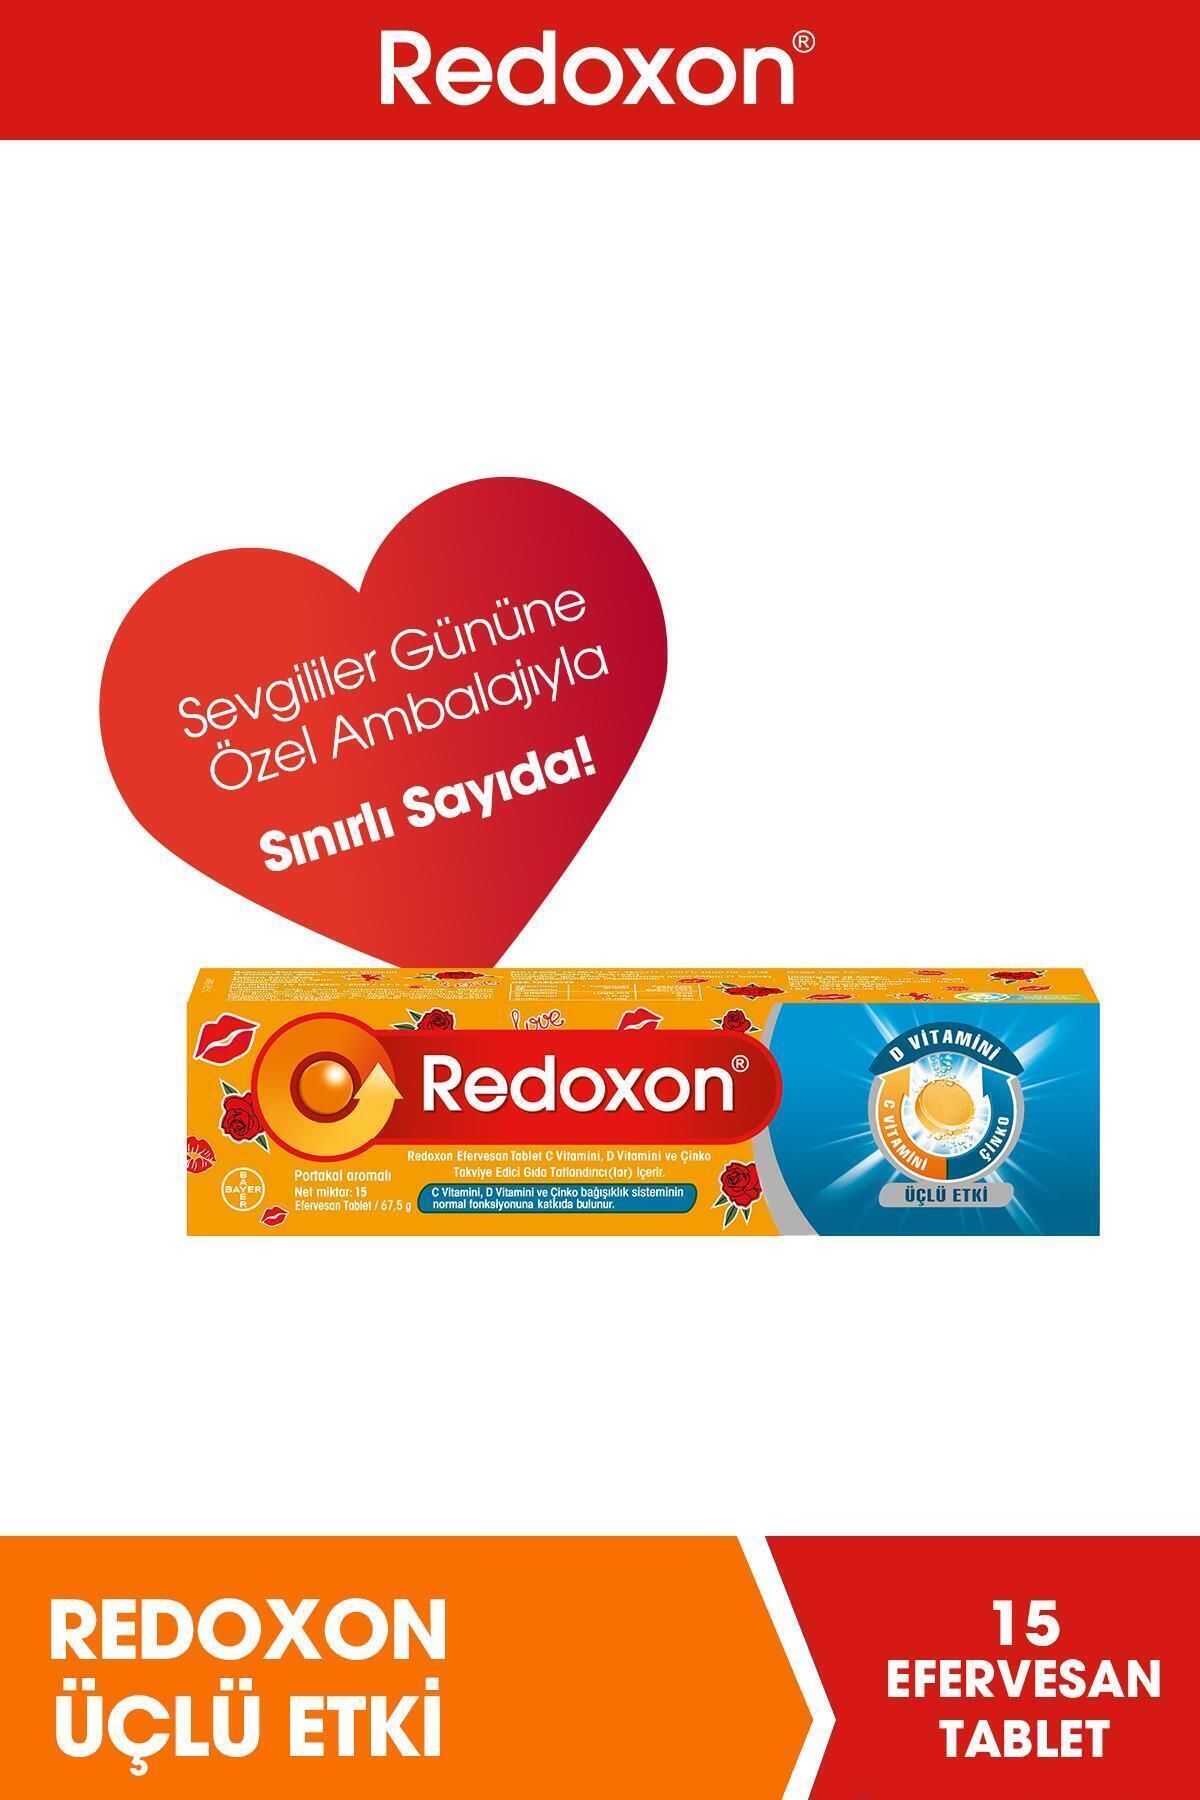 Redoxon Üçlü Etki 15 Efervesan Tablet -Sevgililer Günü Özel Paketi I 1000 Mg C Vitamini, D Vitamini,